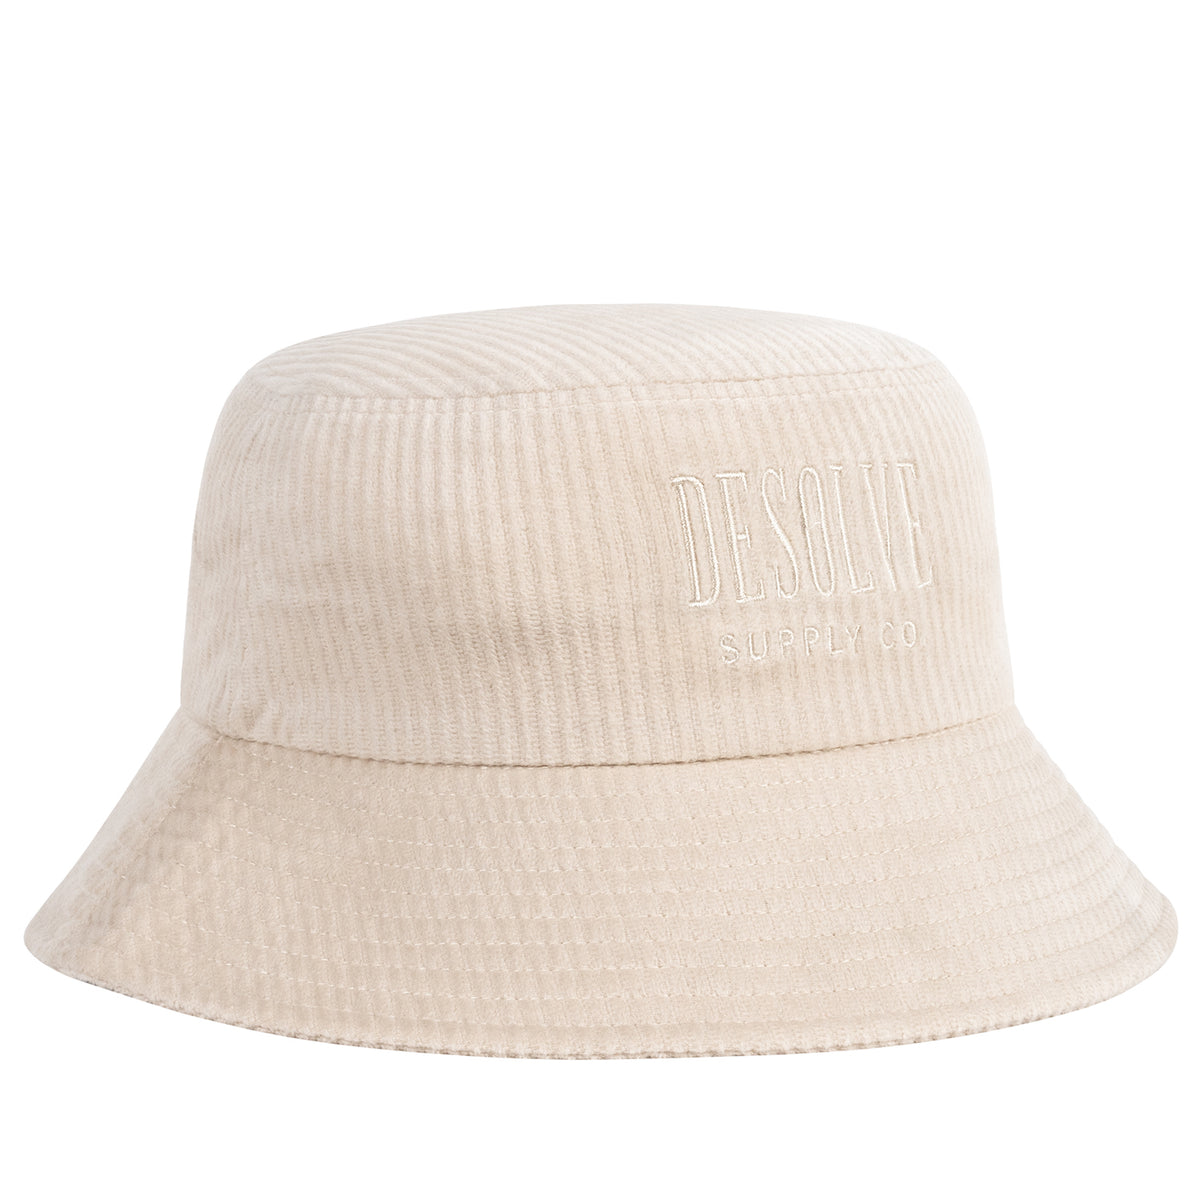 Headwear, Desolve, Caps, Bucket Hats & Beanies NZ - Desolve Supply Co.